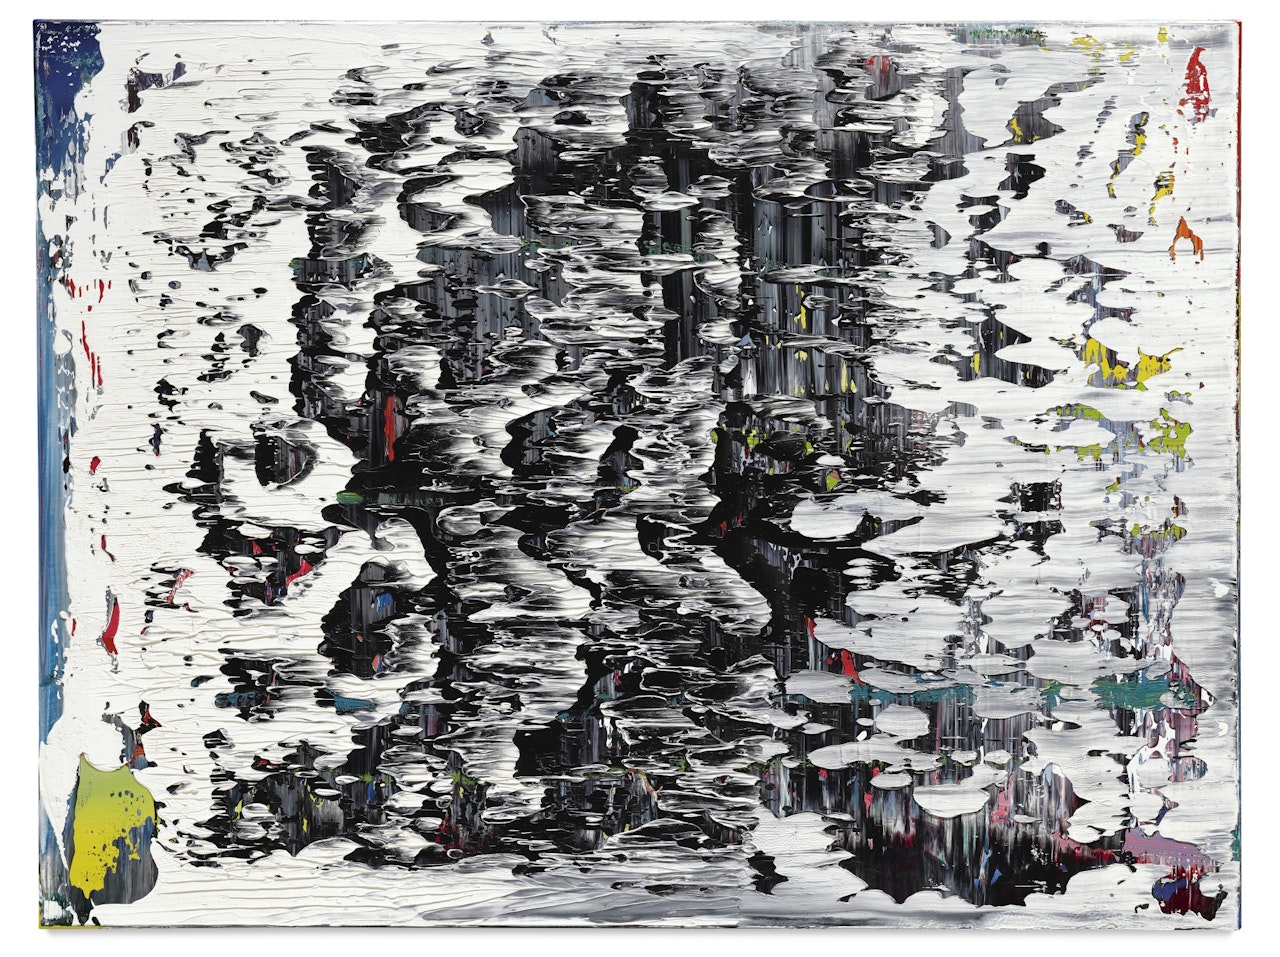 GRAT (5) by Gerhard Richter